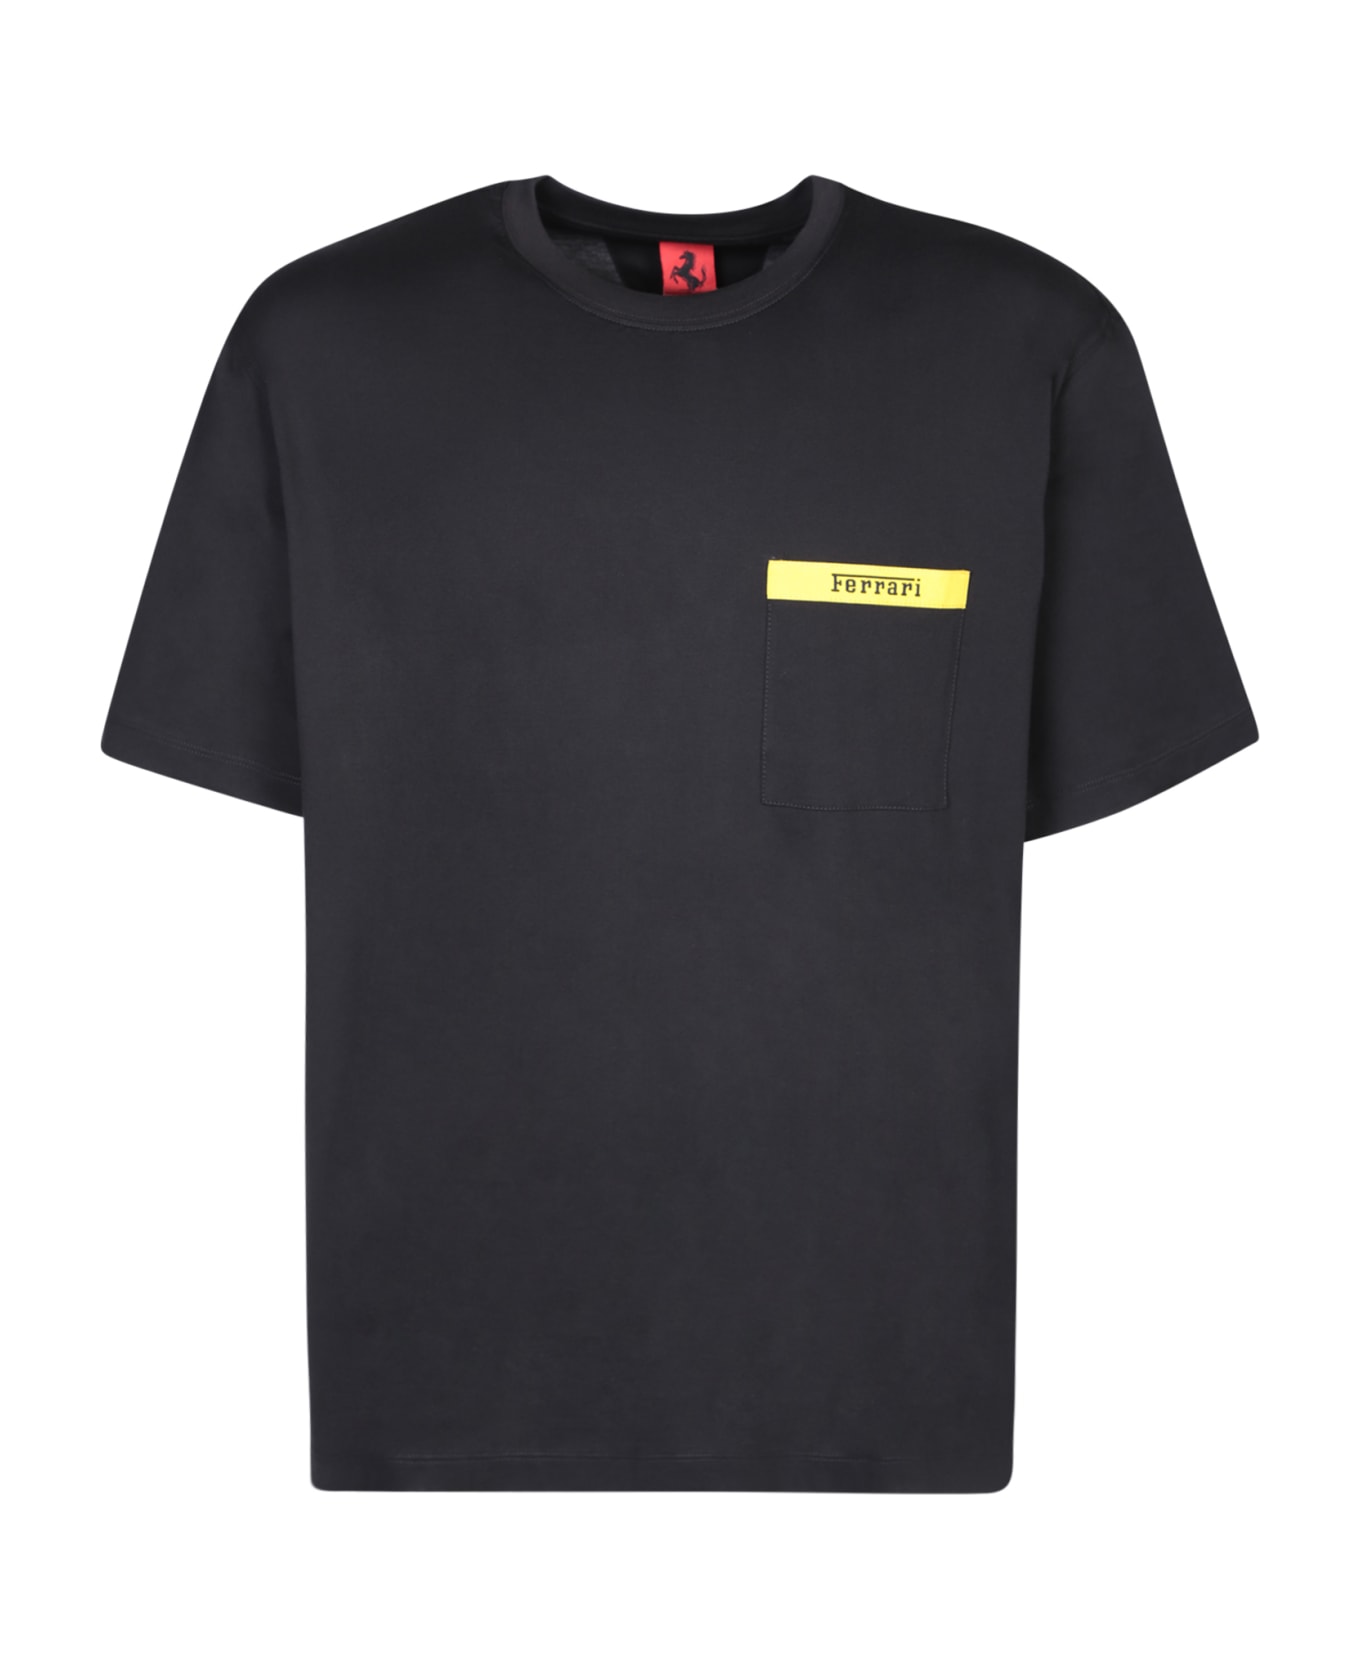 Ferrari Contrasting Logo Black T-shirt - Black